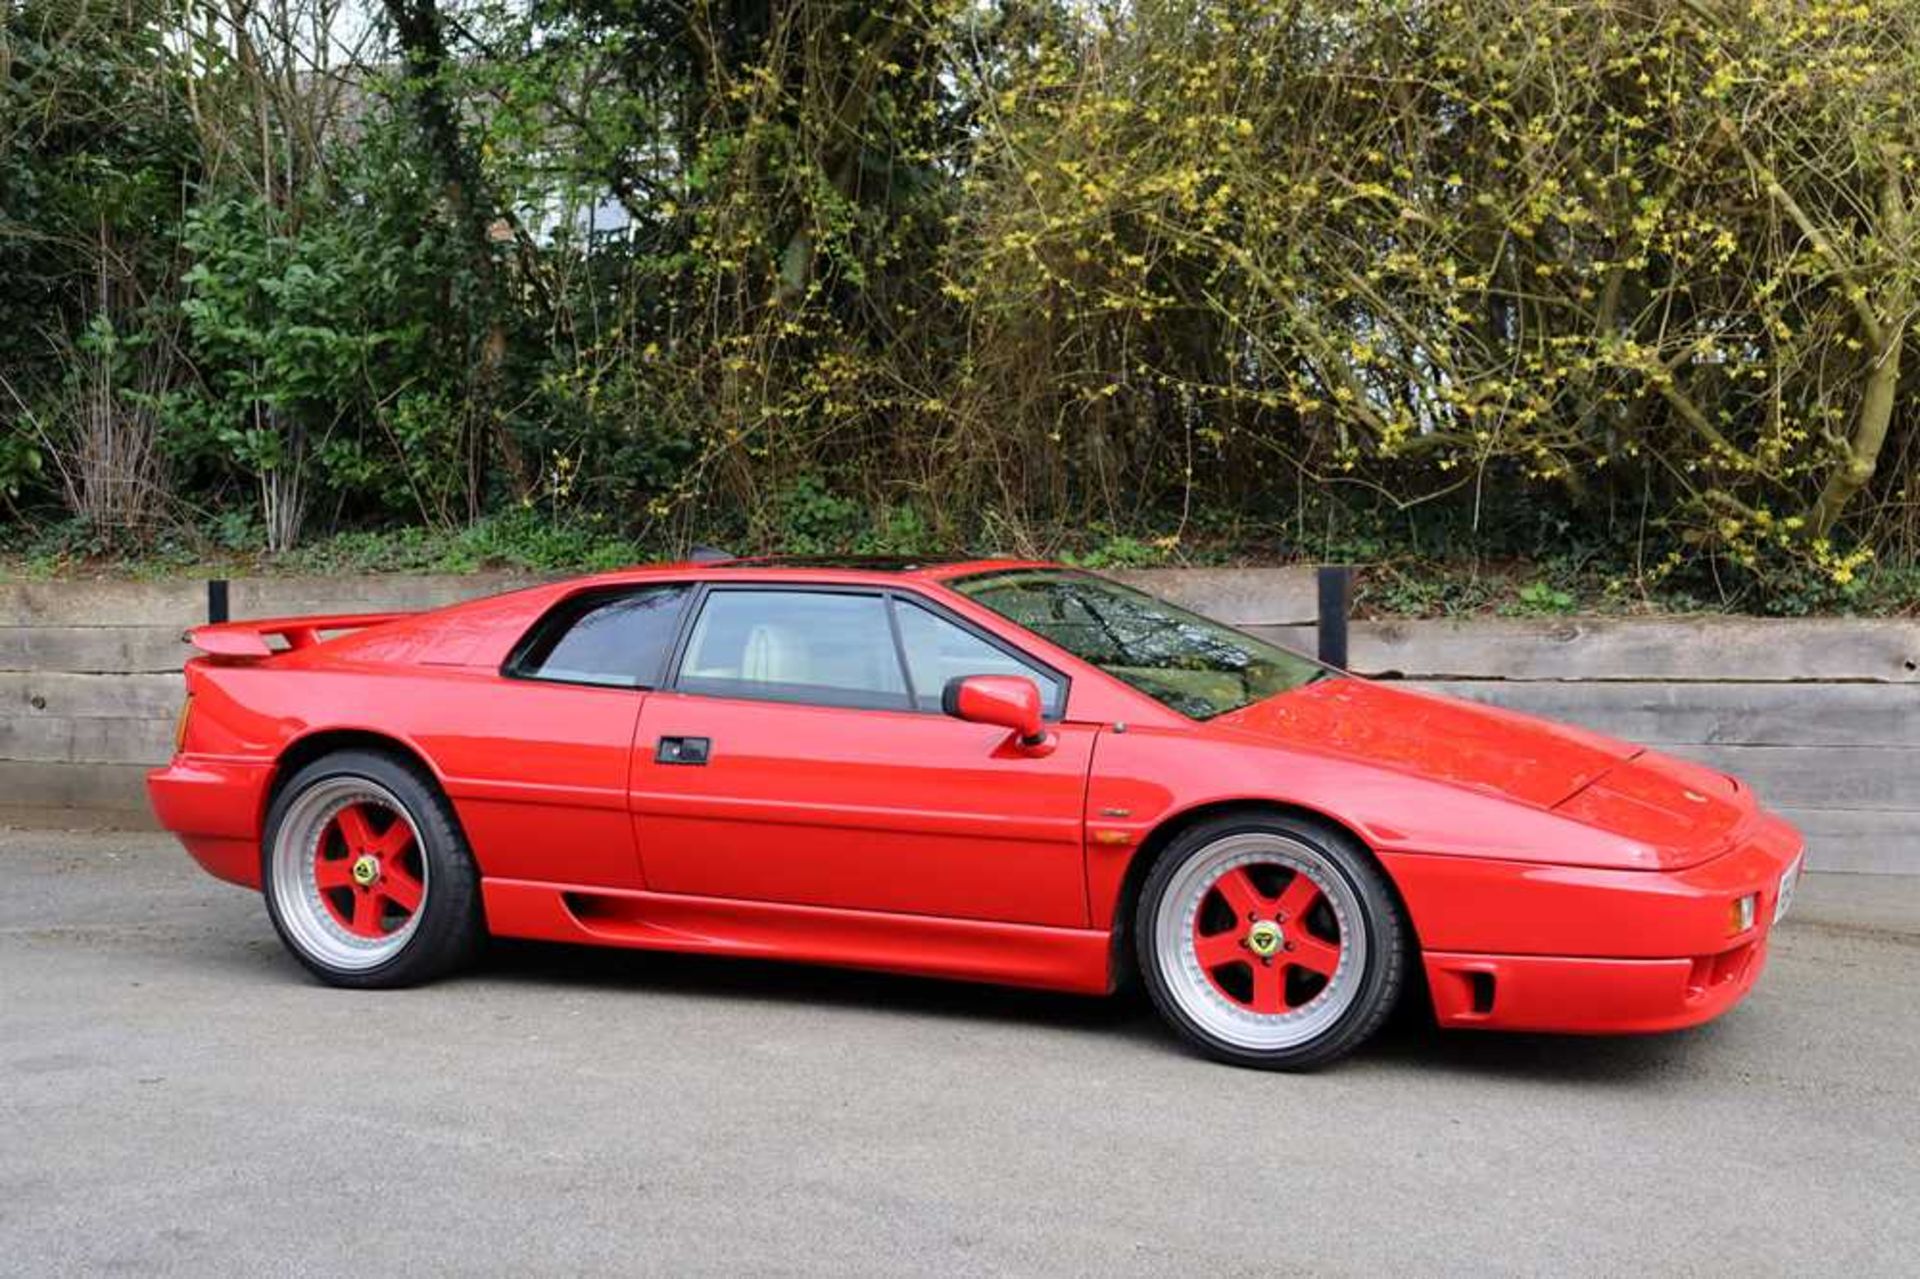 1989 Lotus Esprit Turbo Just 37,000 recorded miles - Image 6 of 72